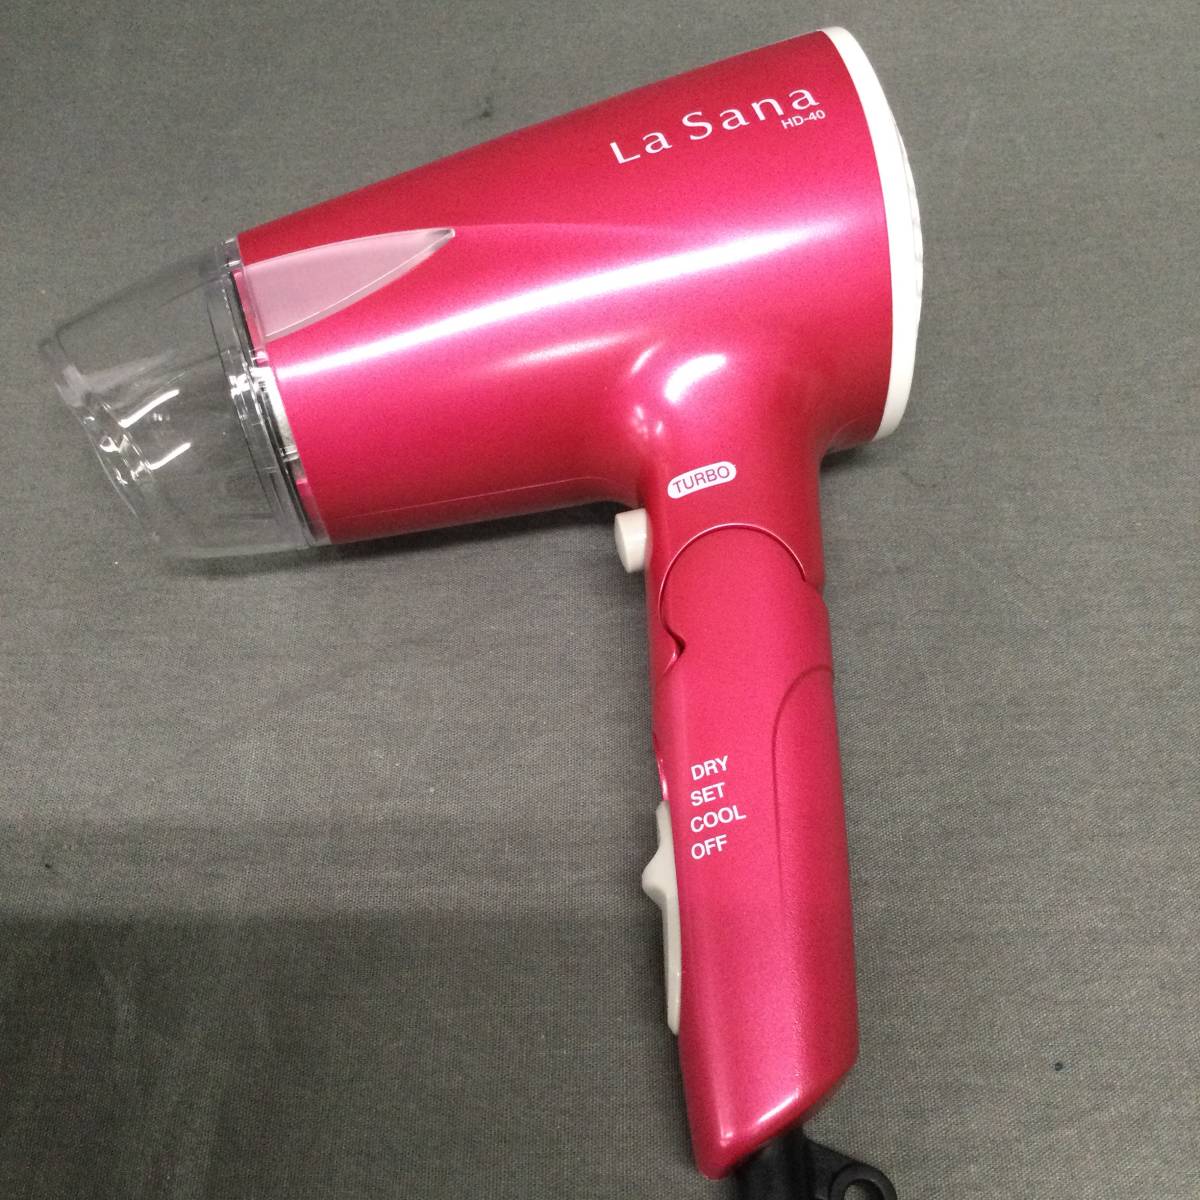 051018 247022 La Sana ラ サーナ マイナスイオン Hair Dryer ヘア ドライヤー HD-40 家庭用 ピンク系カラー 2020年製 通電OK 取扱説明書付_画像3